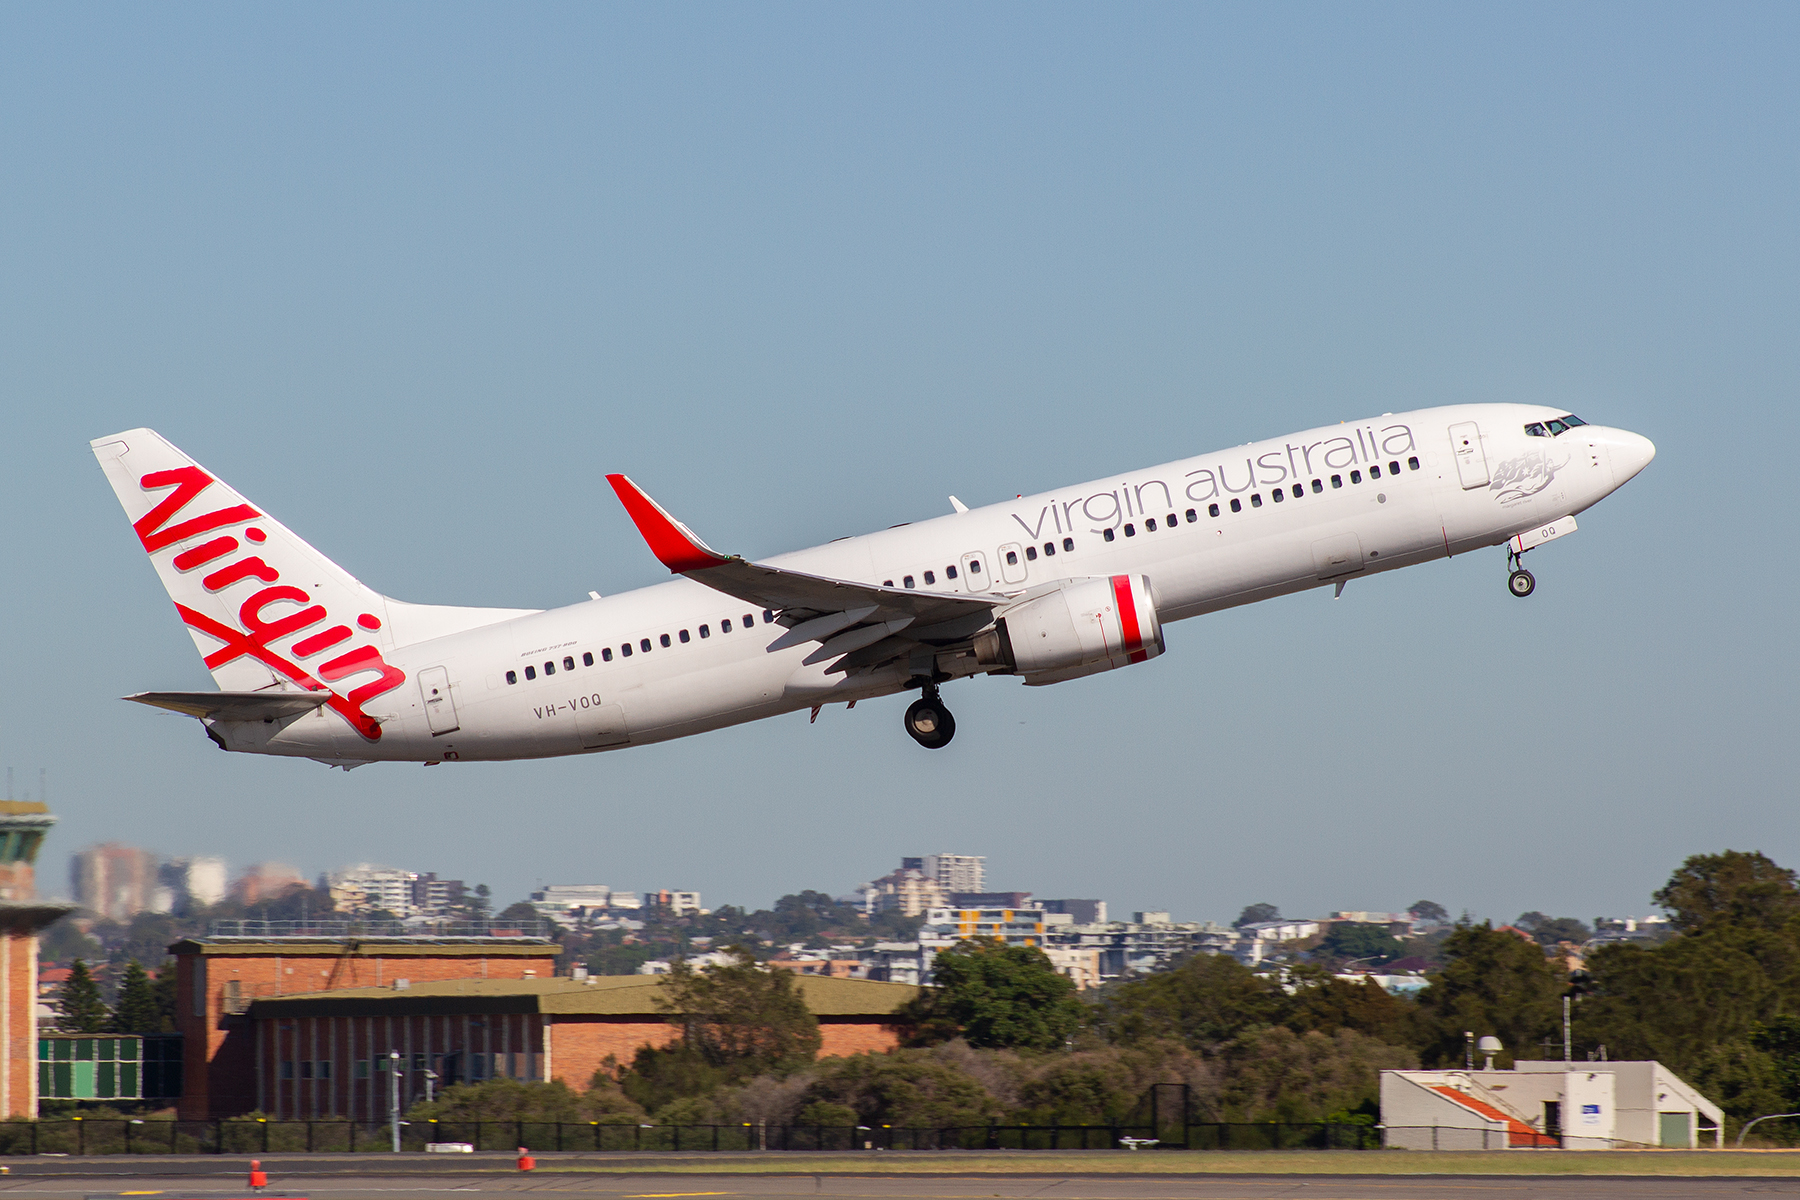 Virgin Australia Airlines Boeing 737-800 VH-VOQ at Kingsford Smith